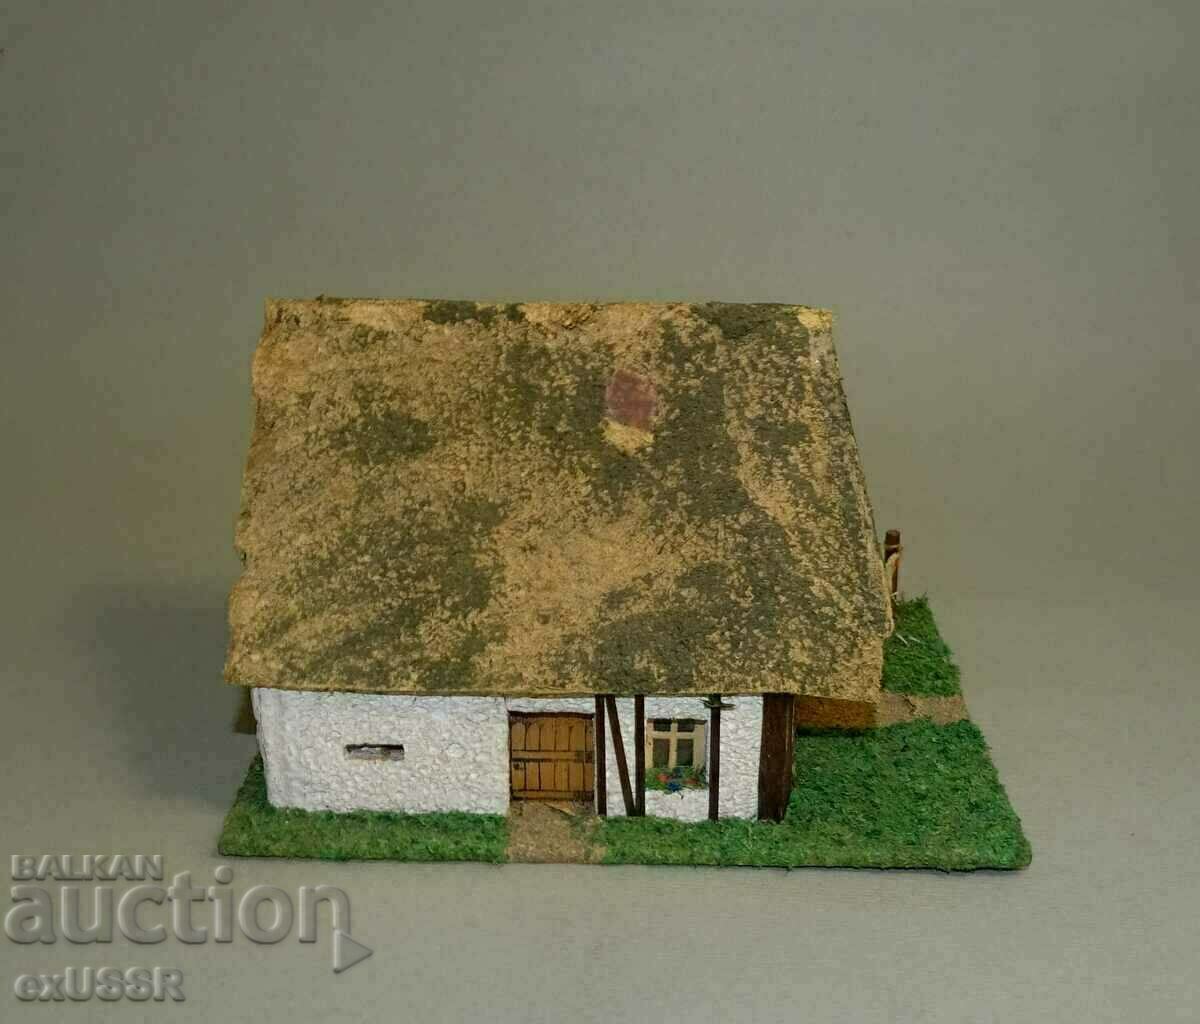 German house model house, model, train, 1